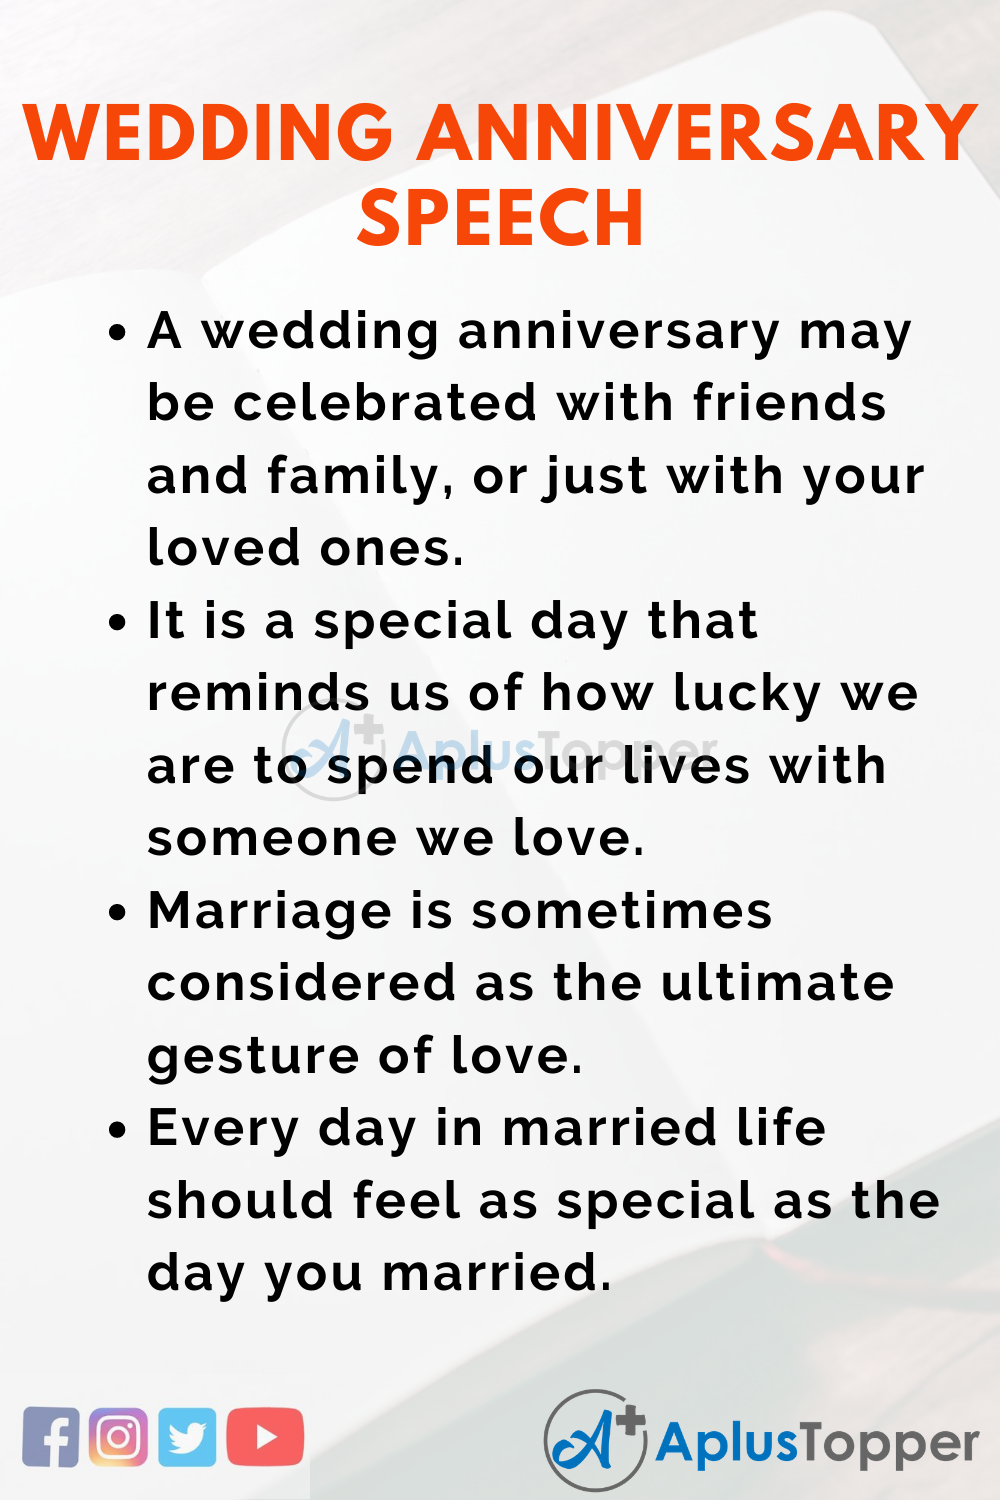 speech on marriage anniversary